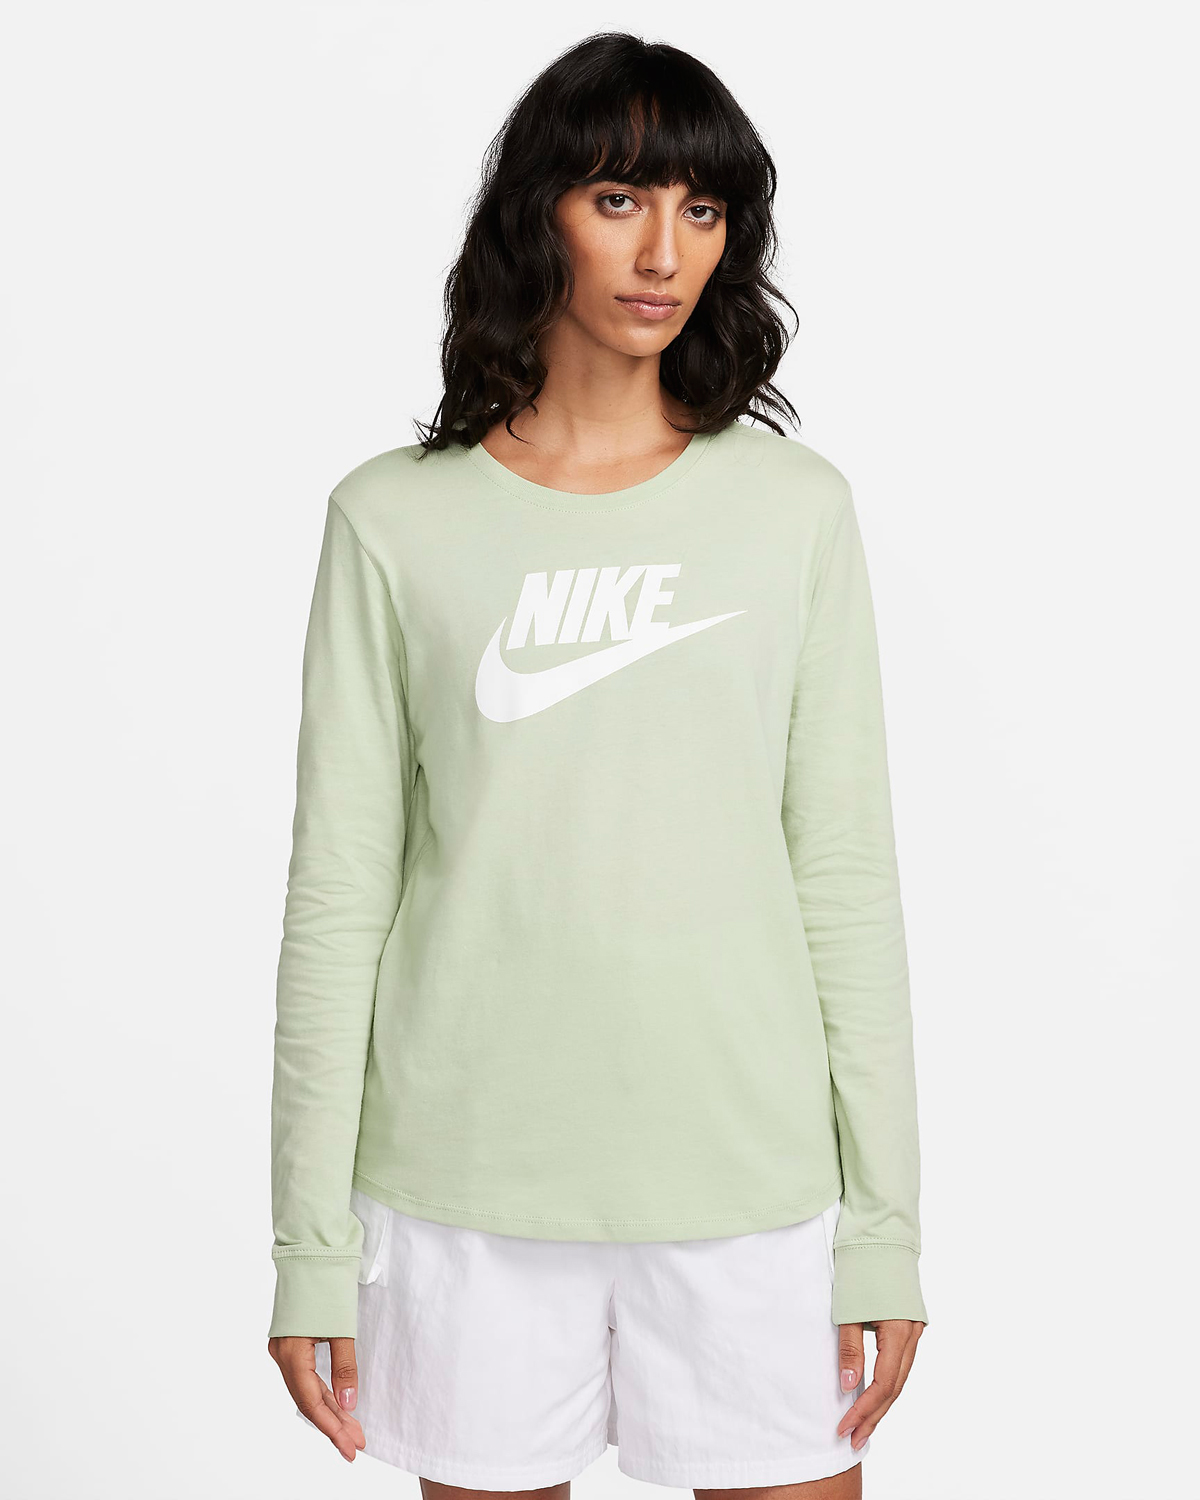 Nike-Sportswear-Womens-Long-Sleeve-T-Shirt-Honeydew